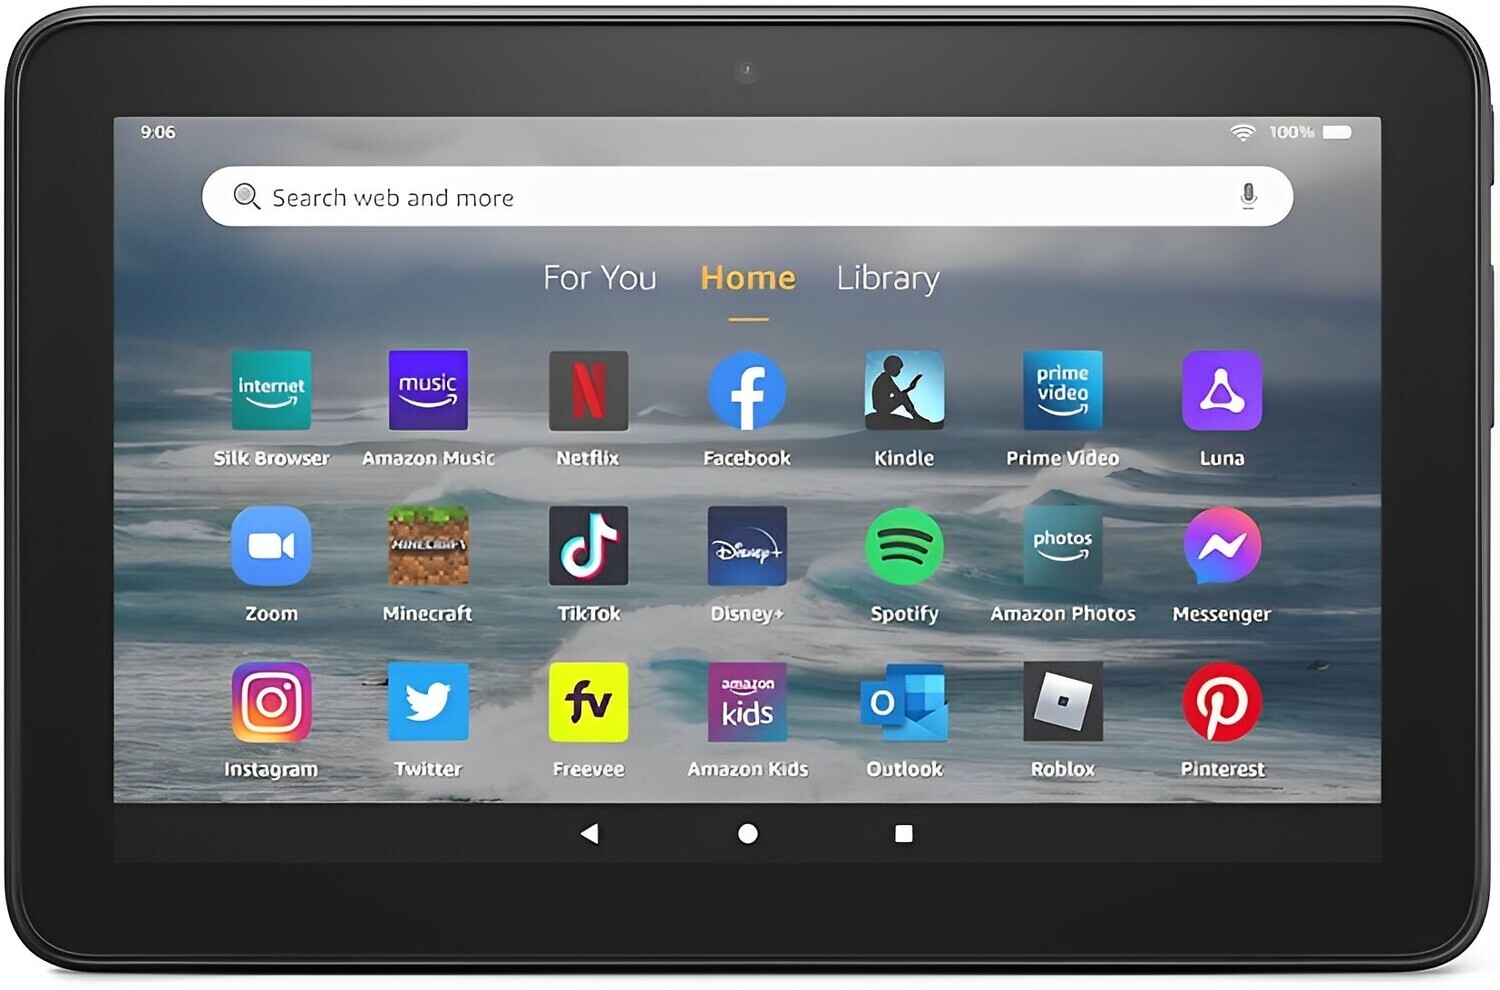 Amazon - Refurbished Fire 7 tablet, 7” display